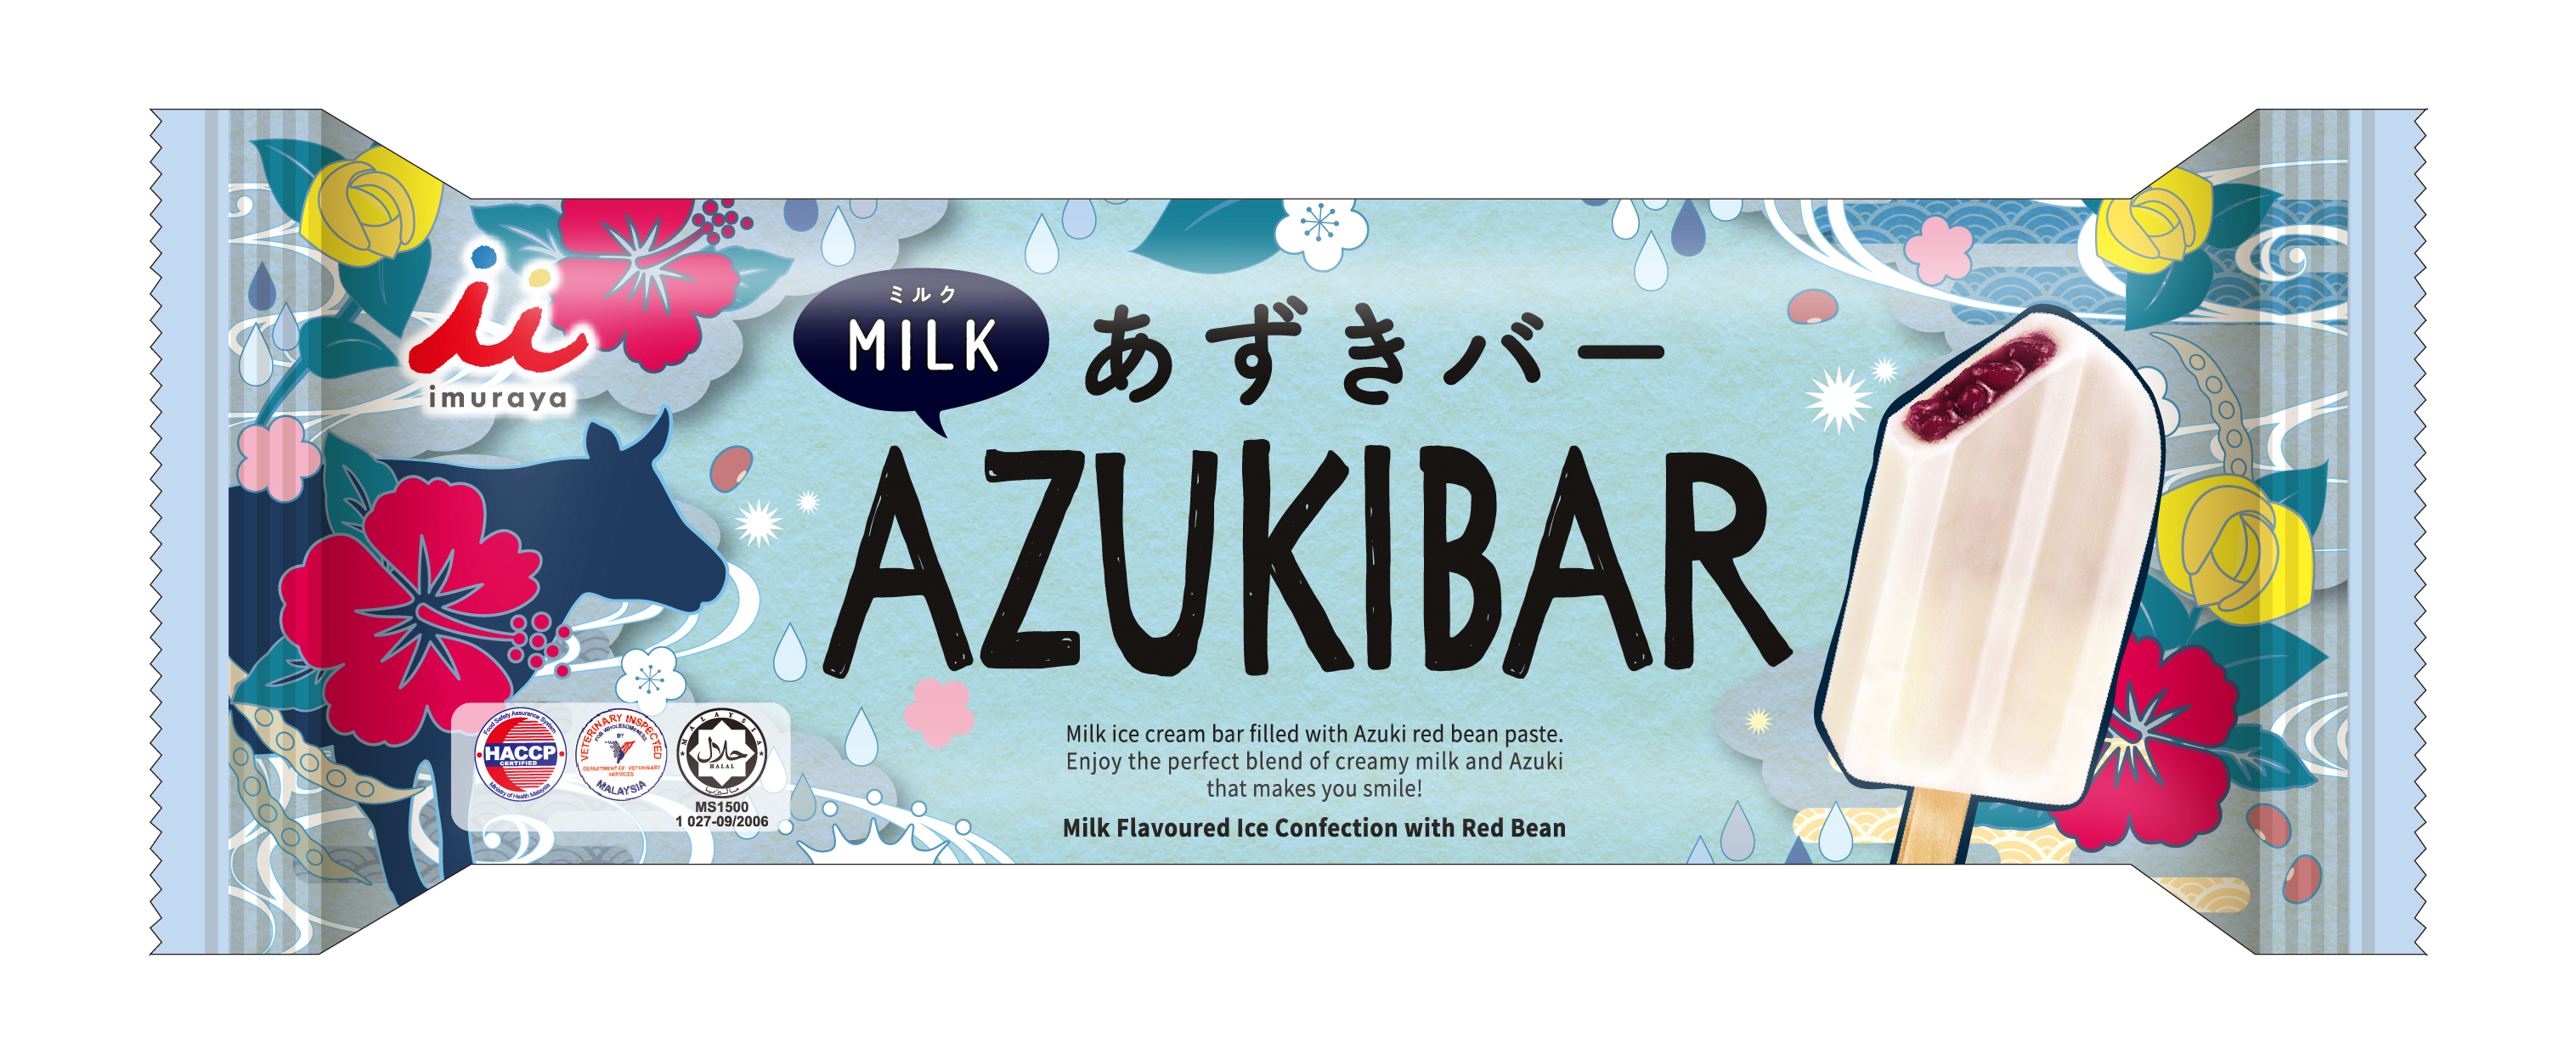 AZUKIBAR Milk / 70ml